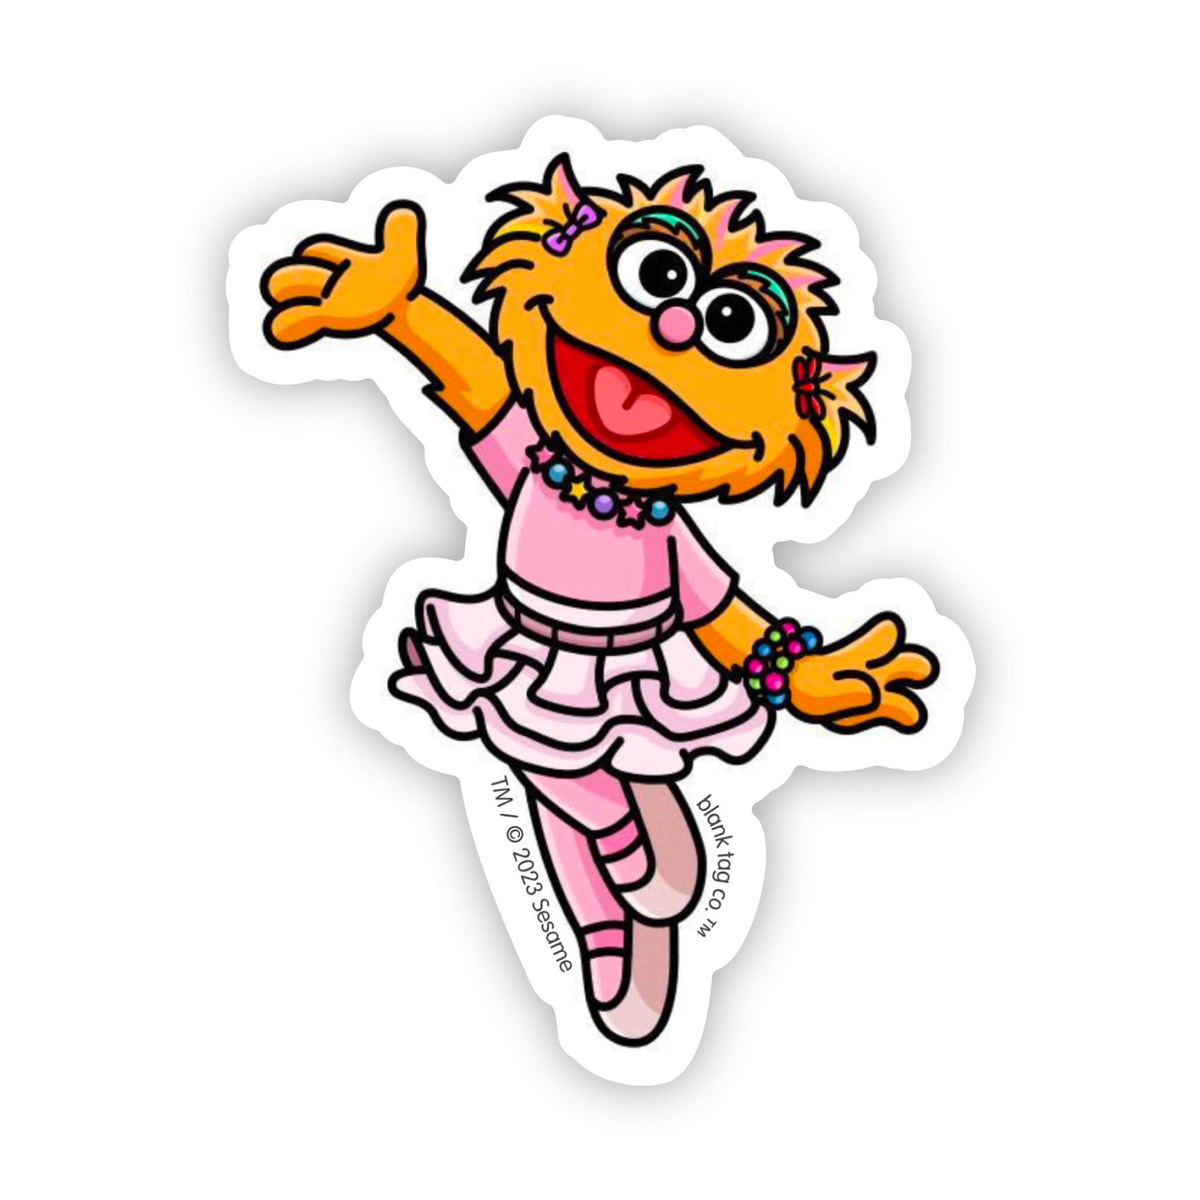 The Sesame Street Sticker Bundle